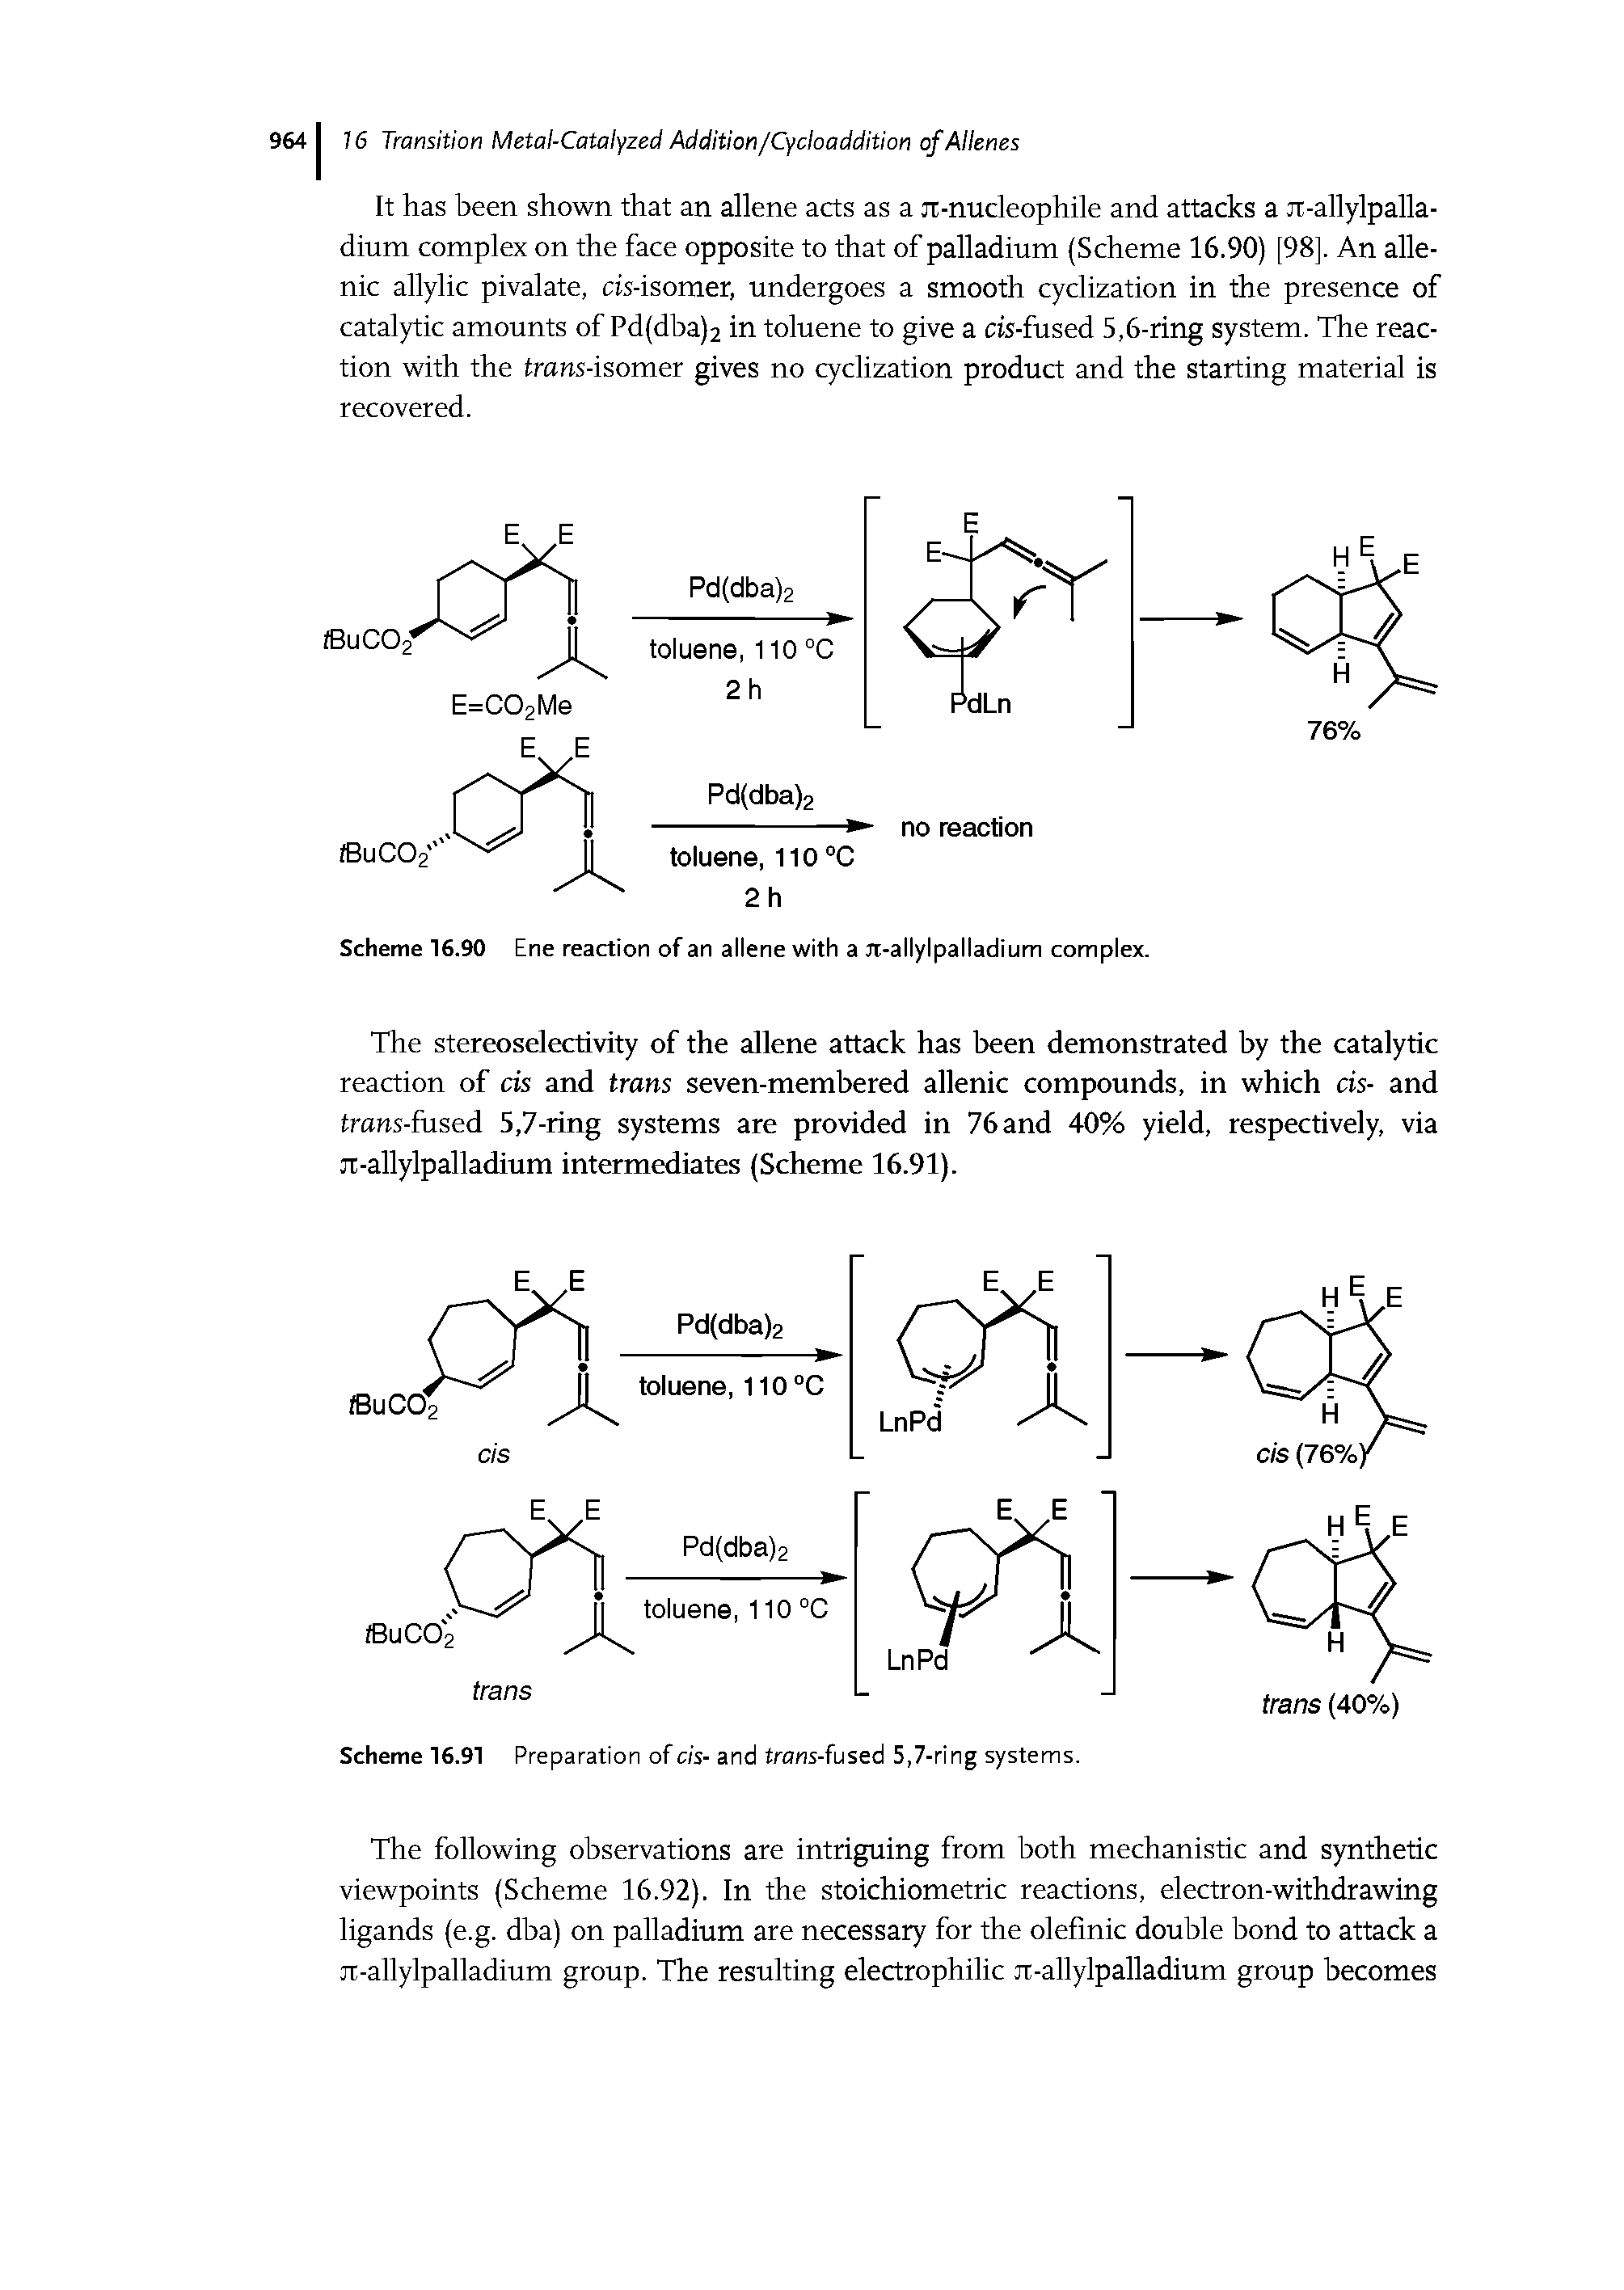 Scheme 16.90 Ene reaction of an allene with a Jt-allylpalladium complex.